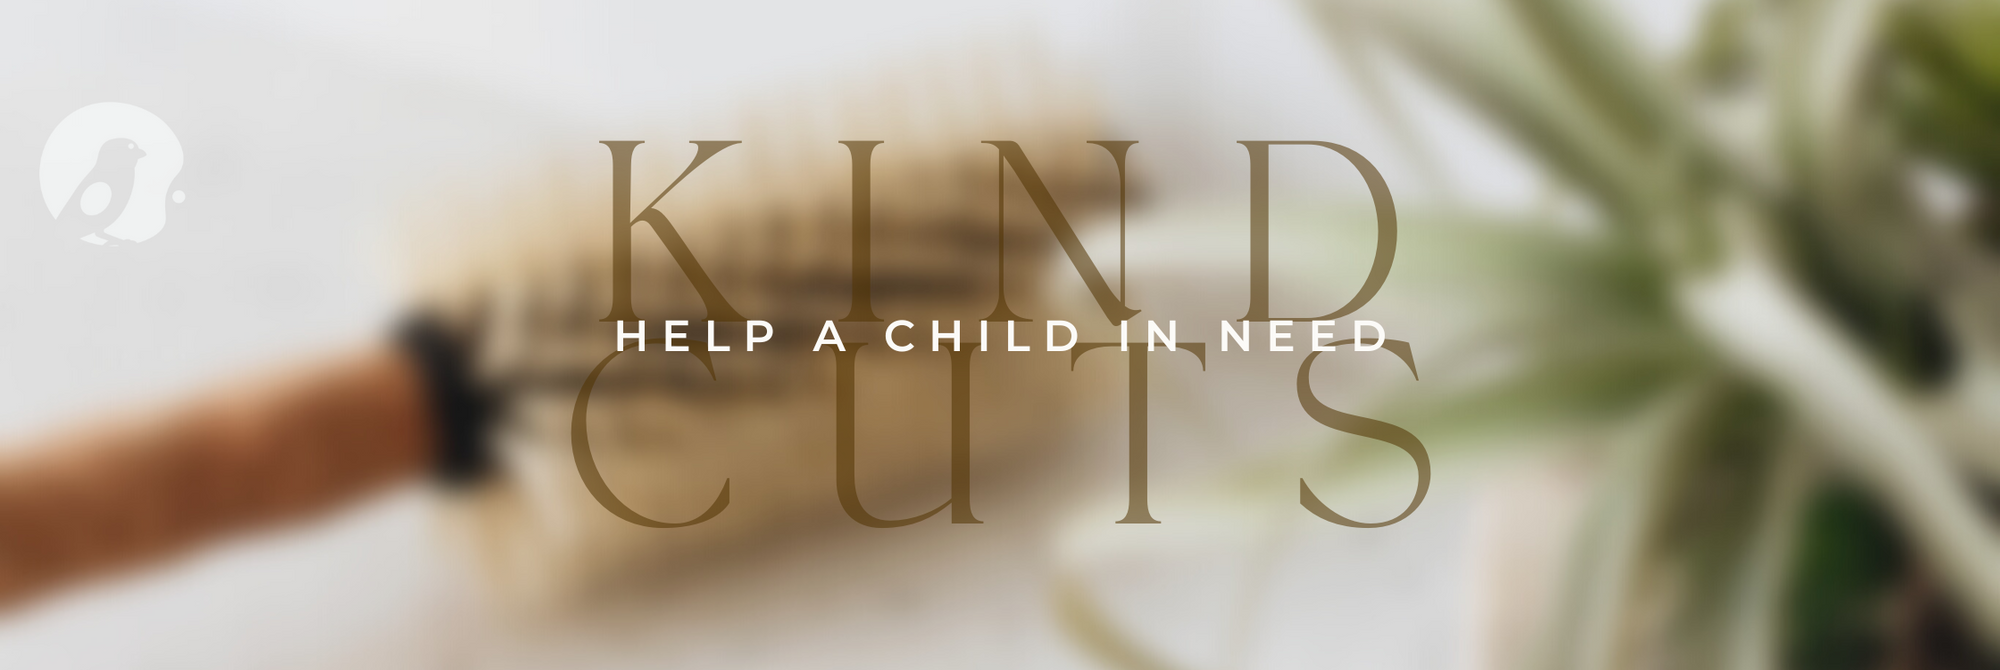 Salon Society bird icon - KIND CUTS - HELP A CHILD IN NEED